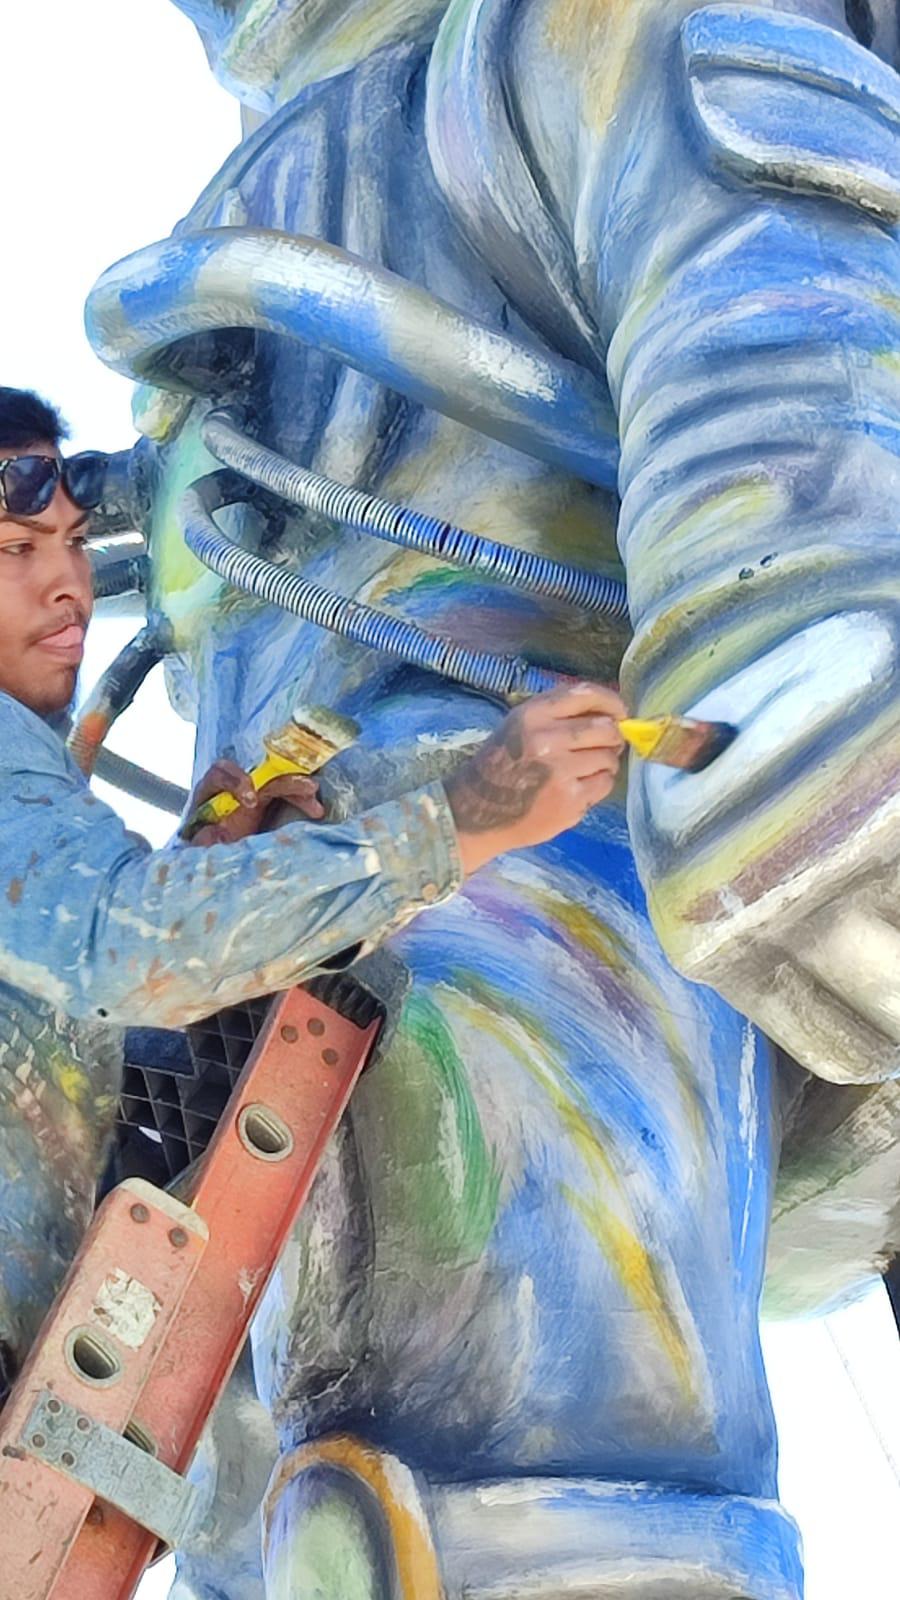 $!Grafitean monigote del astronauta de Carnaval